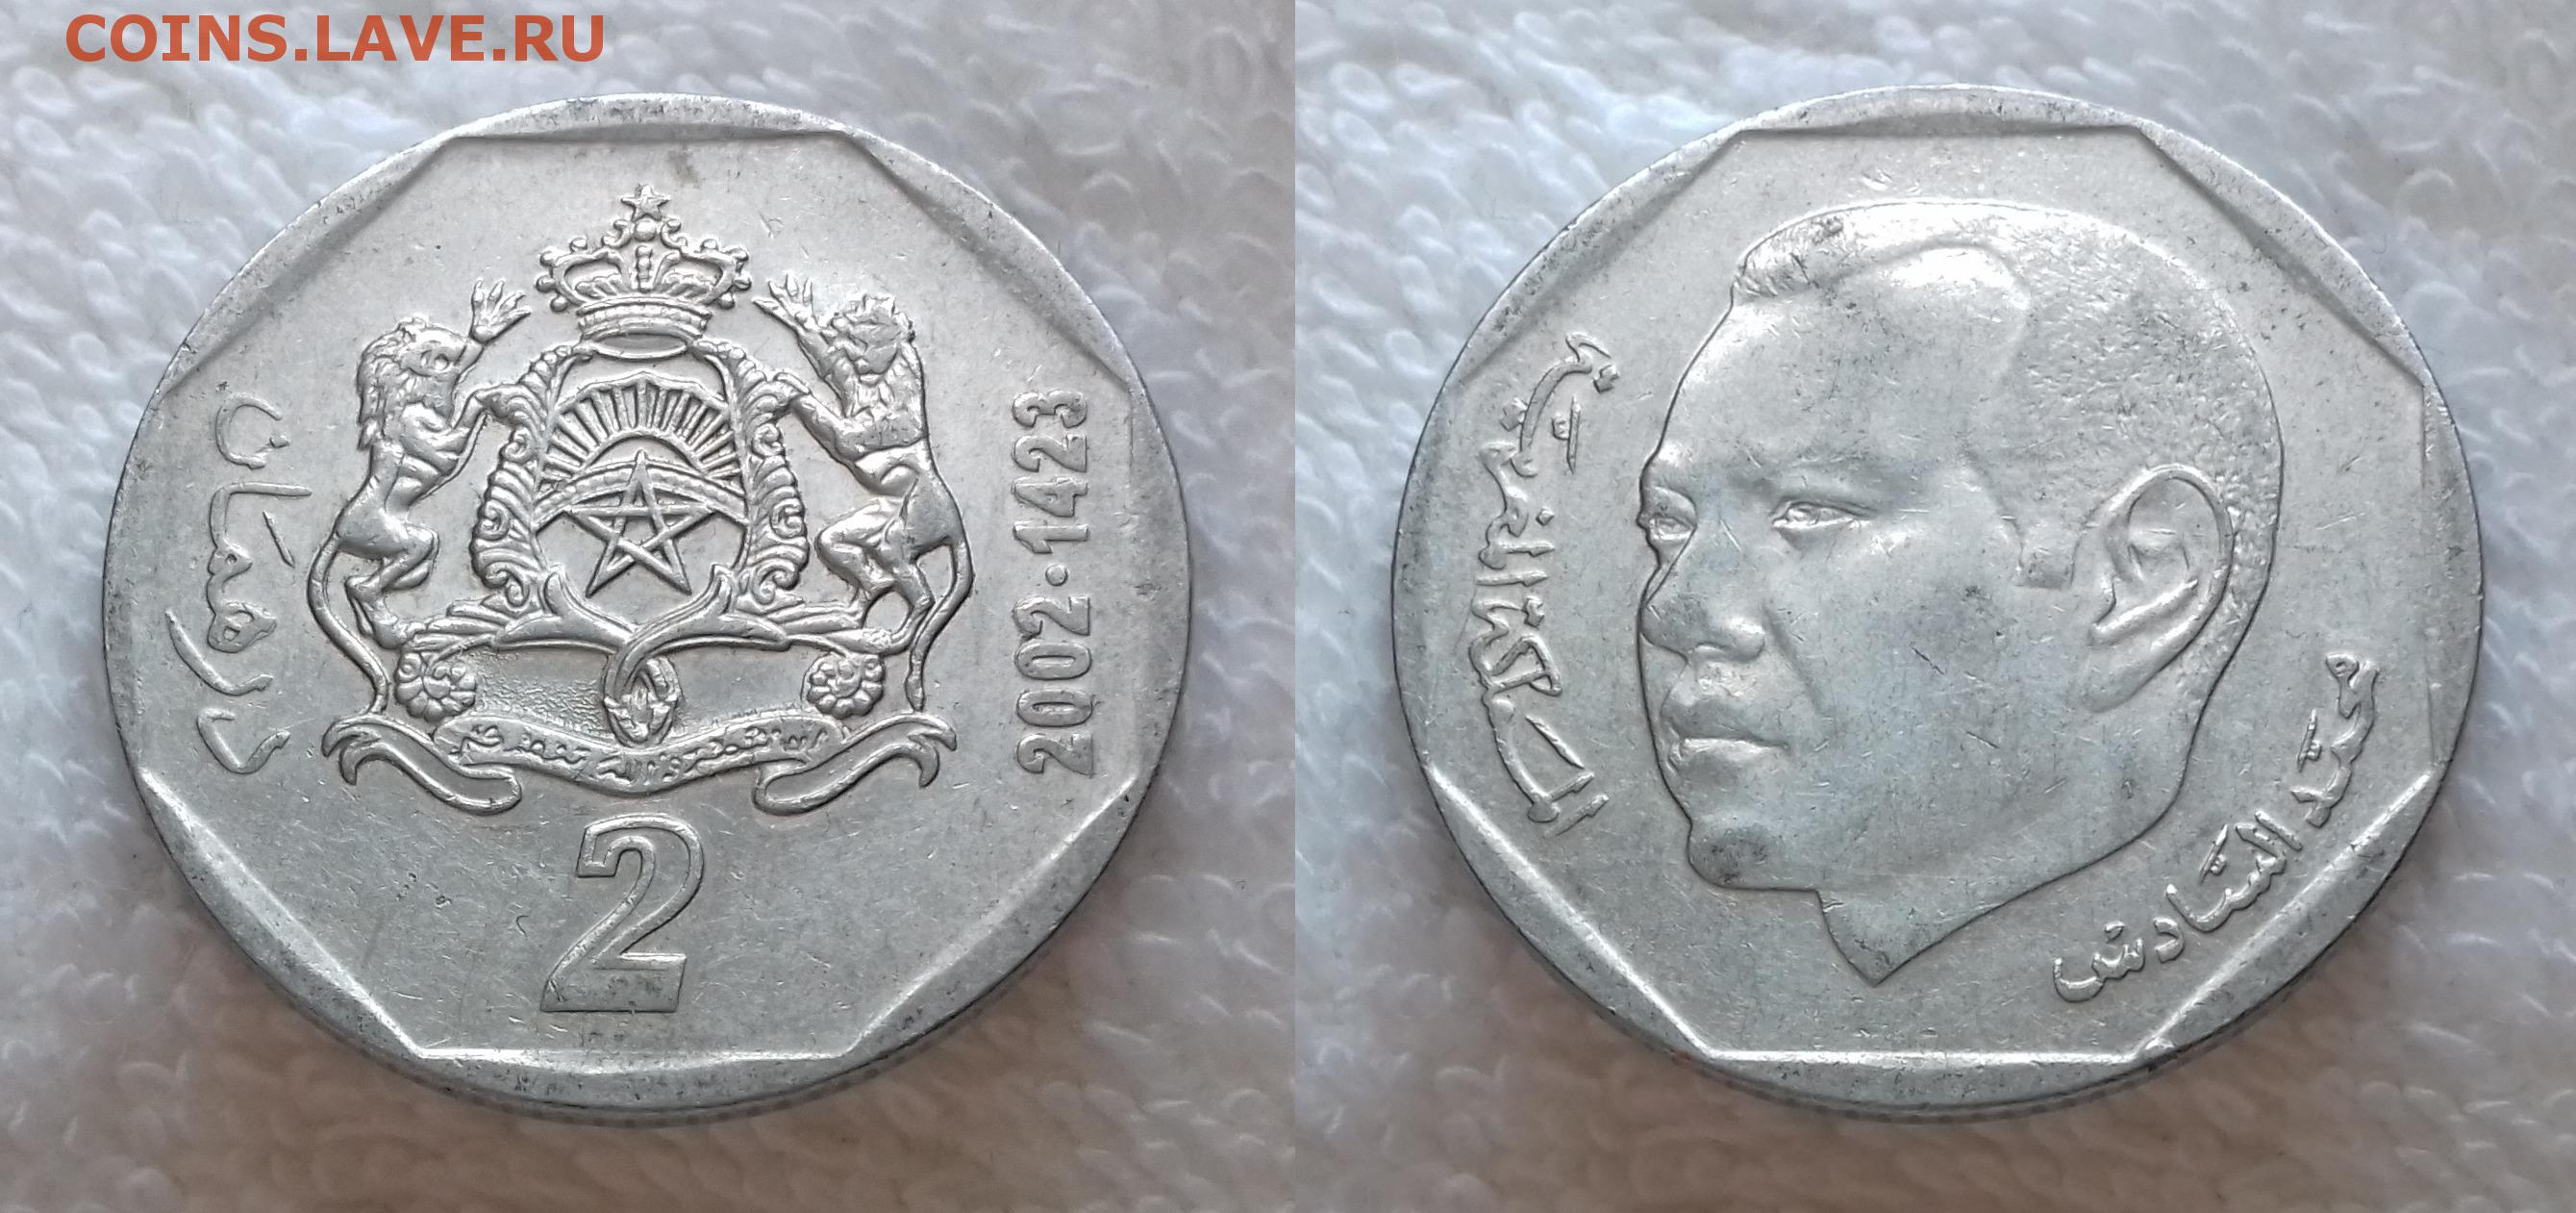 95 дирхам. Монета 2 дирхама Марокко 2002 года. 100 Марокканских дирхамов монета 2008. Монета 2 дирхама Египет. Марокко 0,5 dirham 2002.